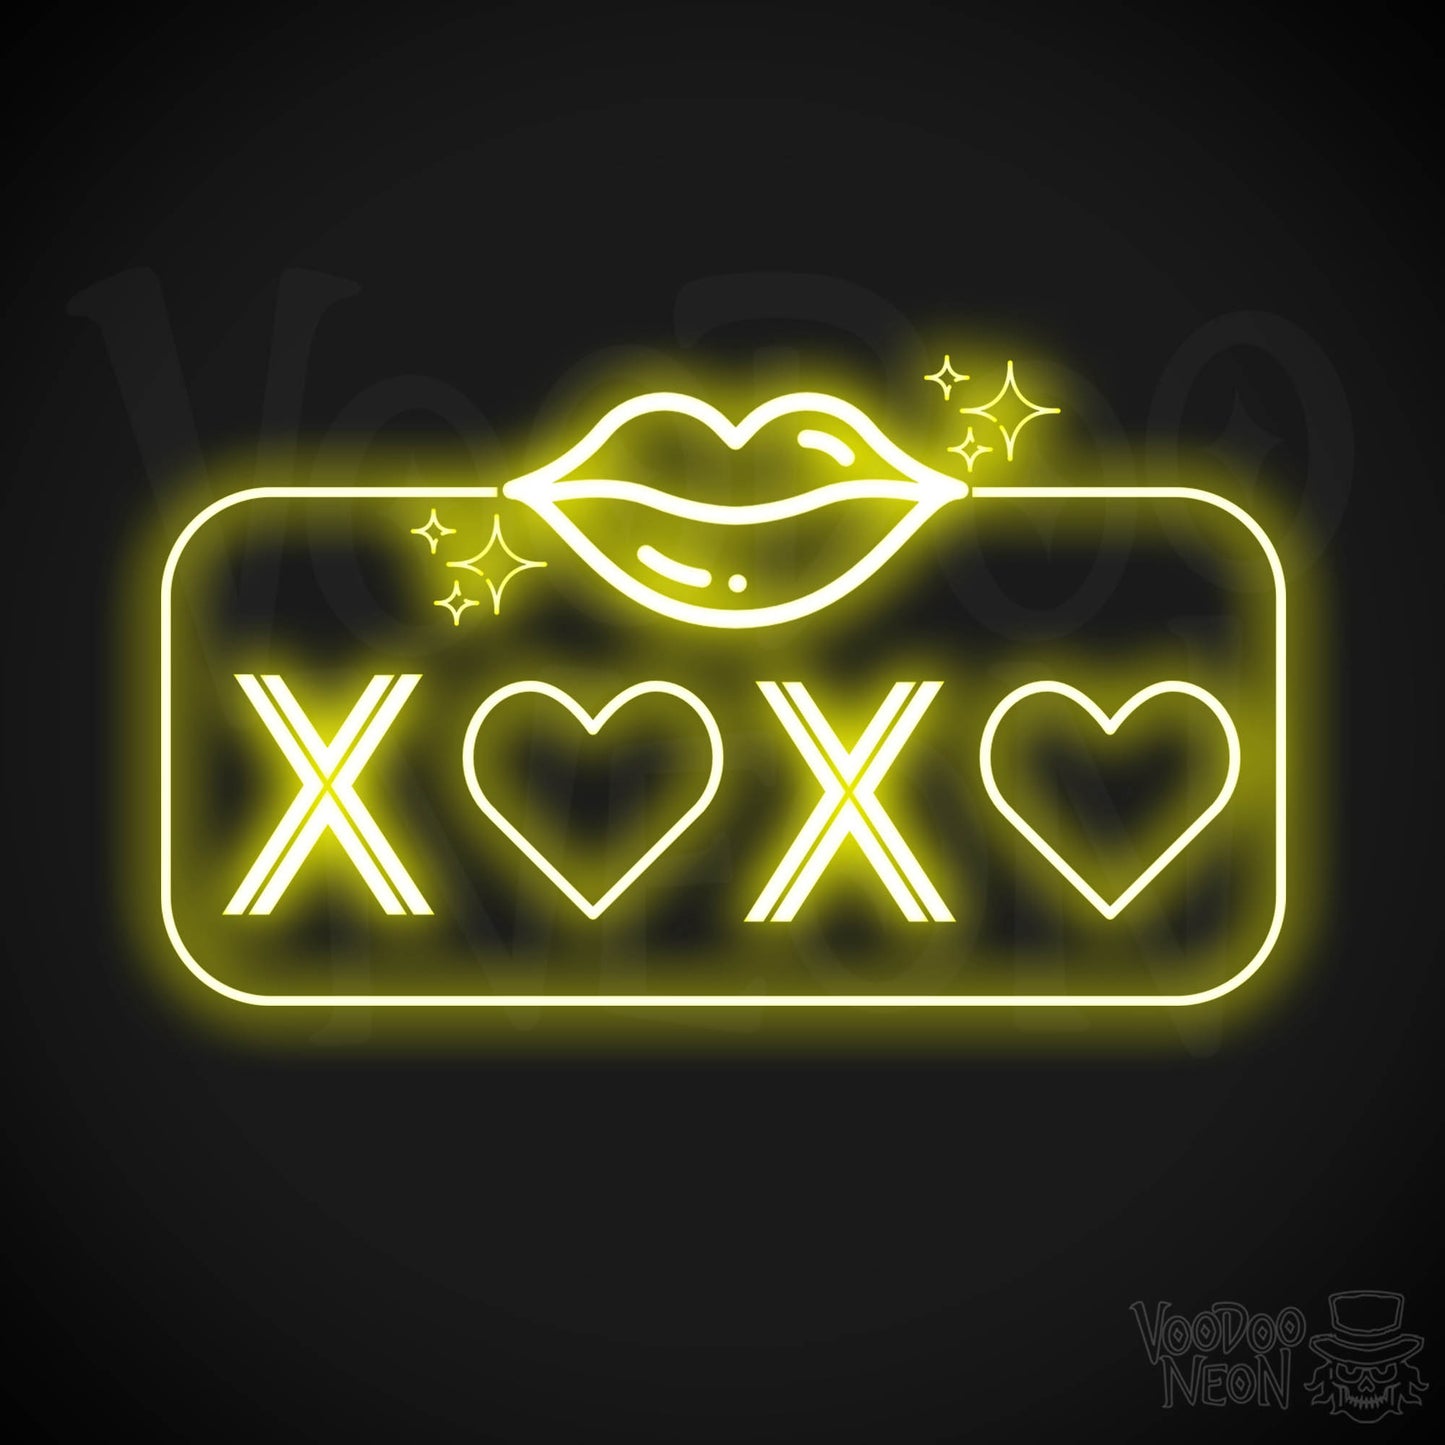 Xoxo Neon Sign - Neon XOXO - Kiss Hug Neon Wall Art - Color Yellow